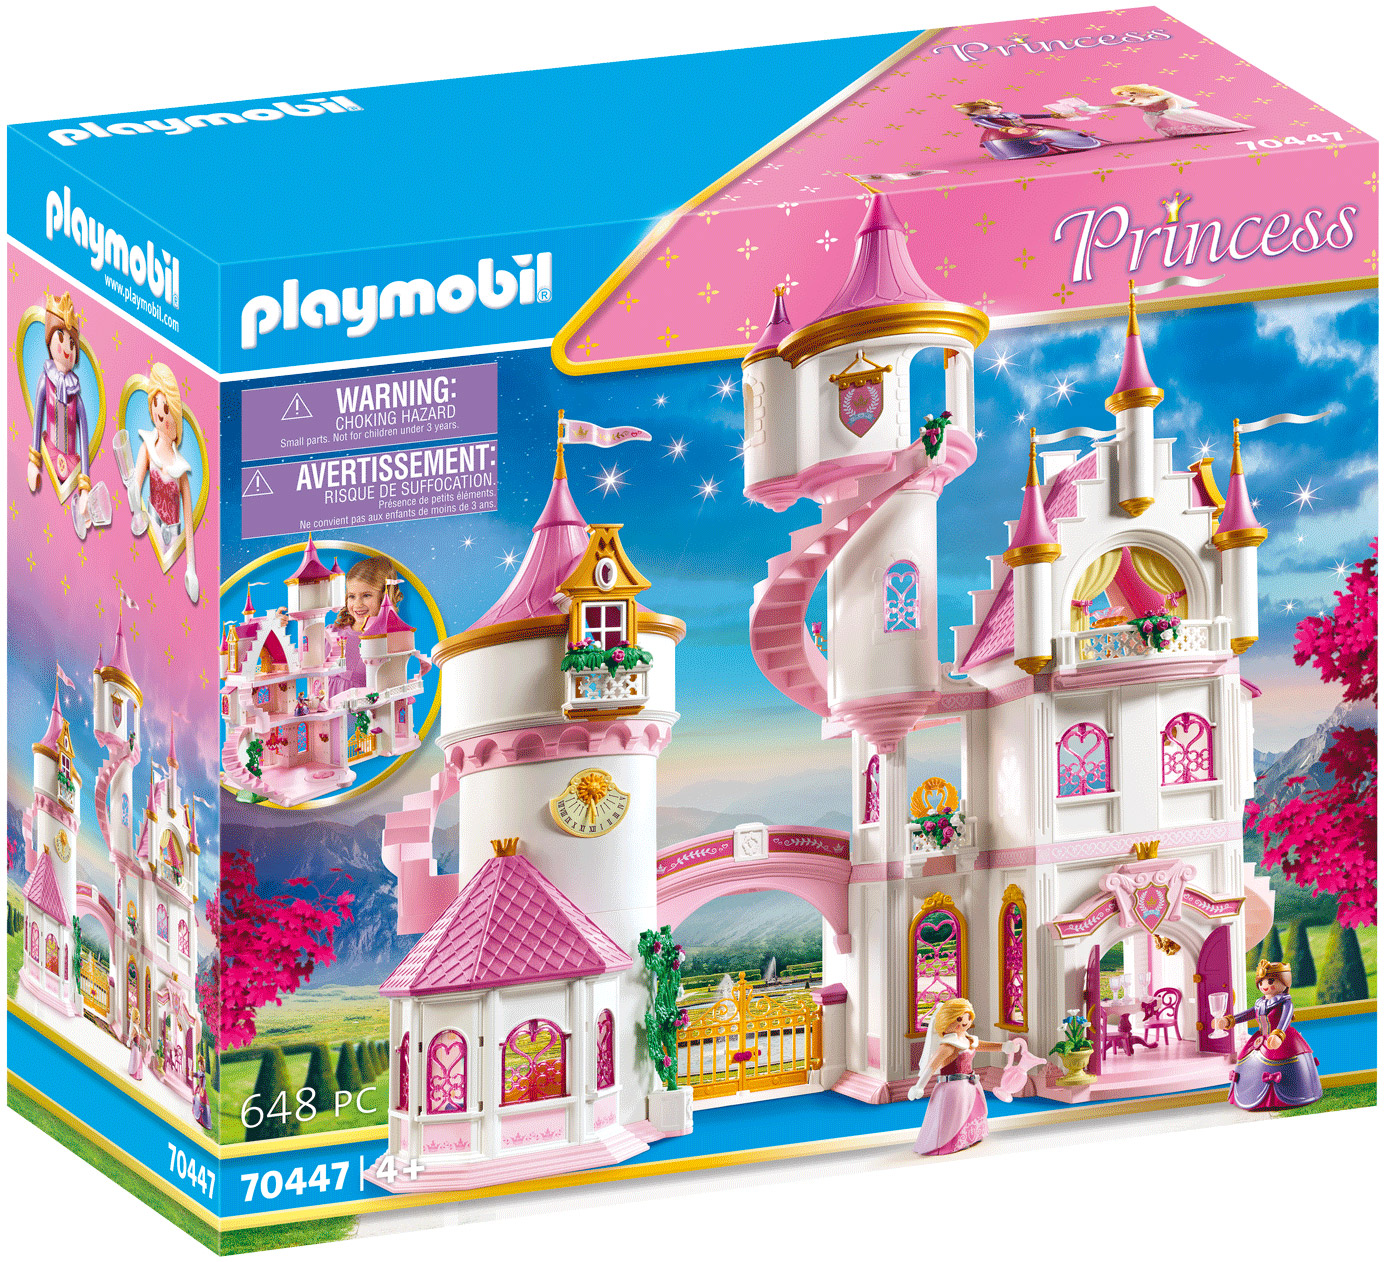 Playmobil Princess 4250 - Château de Princesse / Palais des